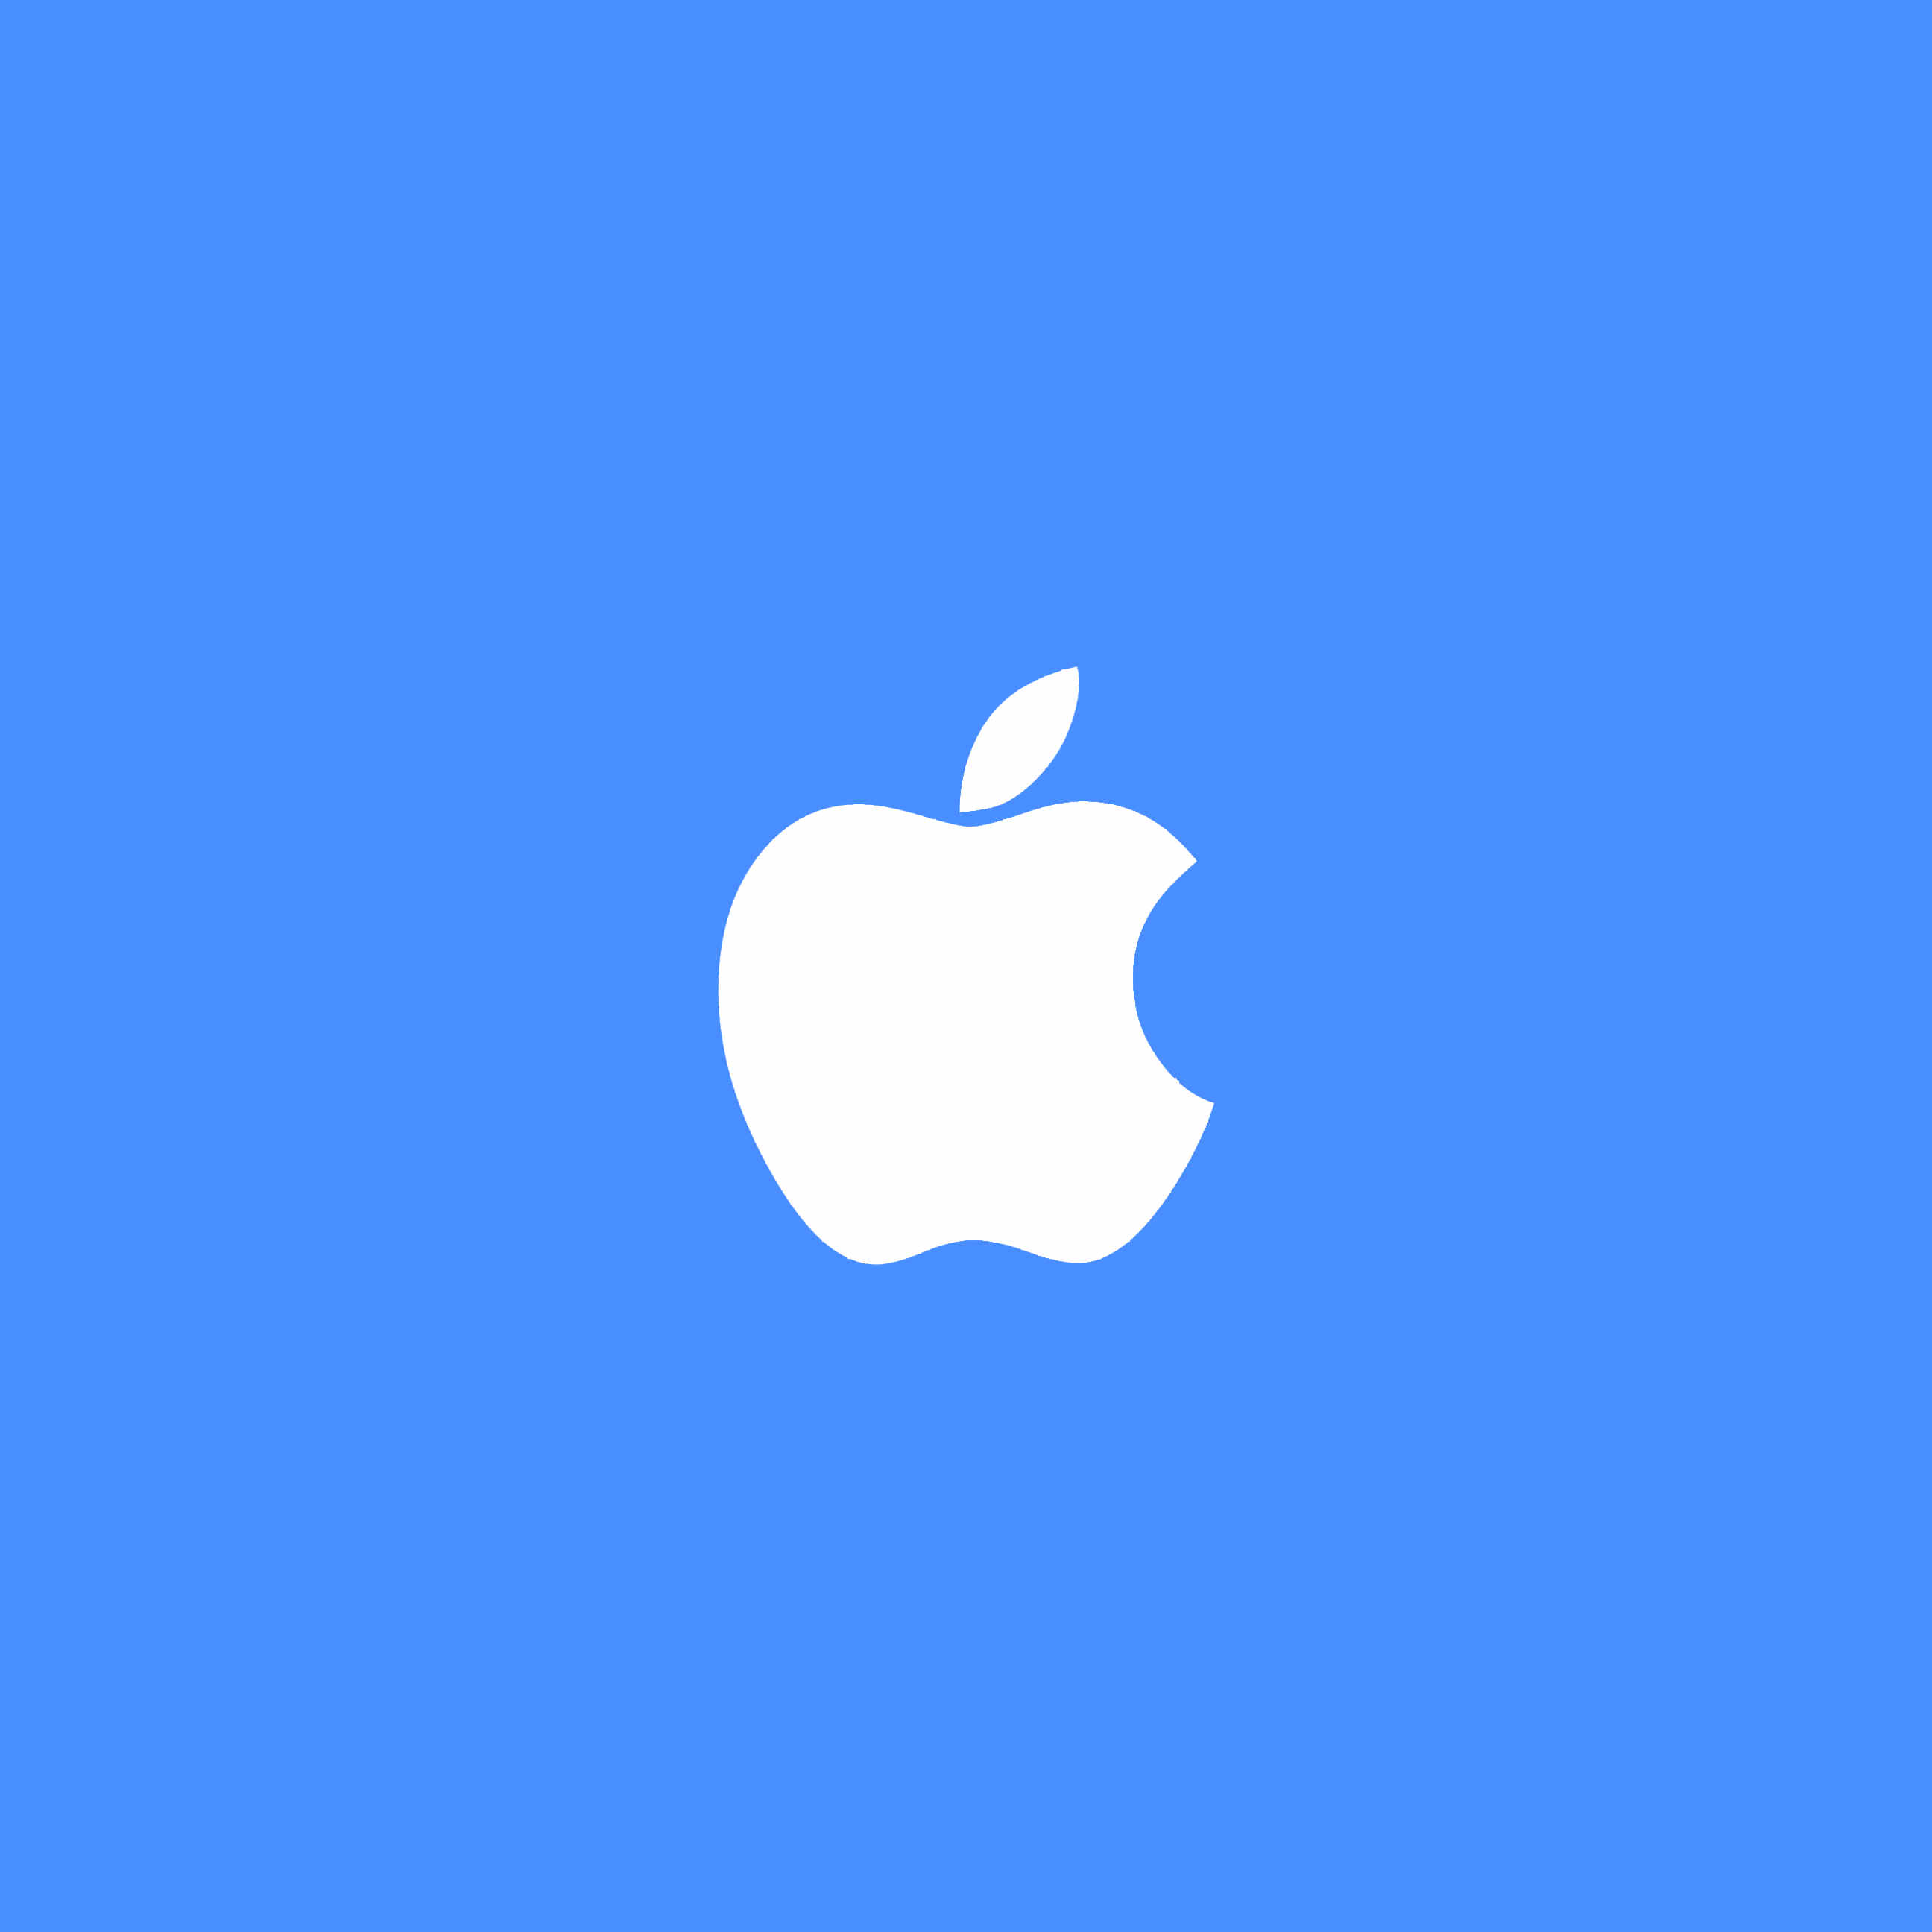 The Blue White Apple Logo Wallpapersc Iphone6splus